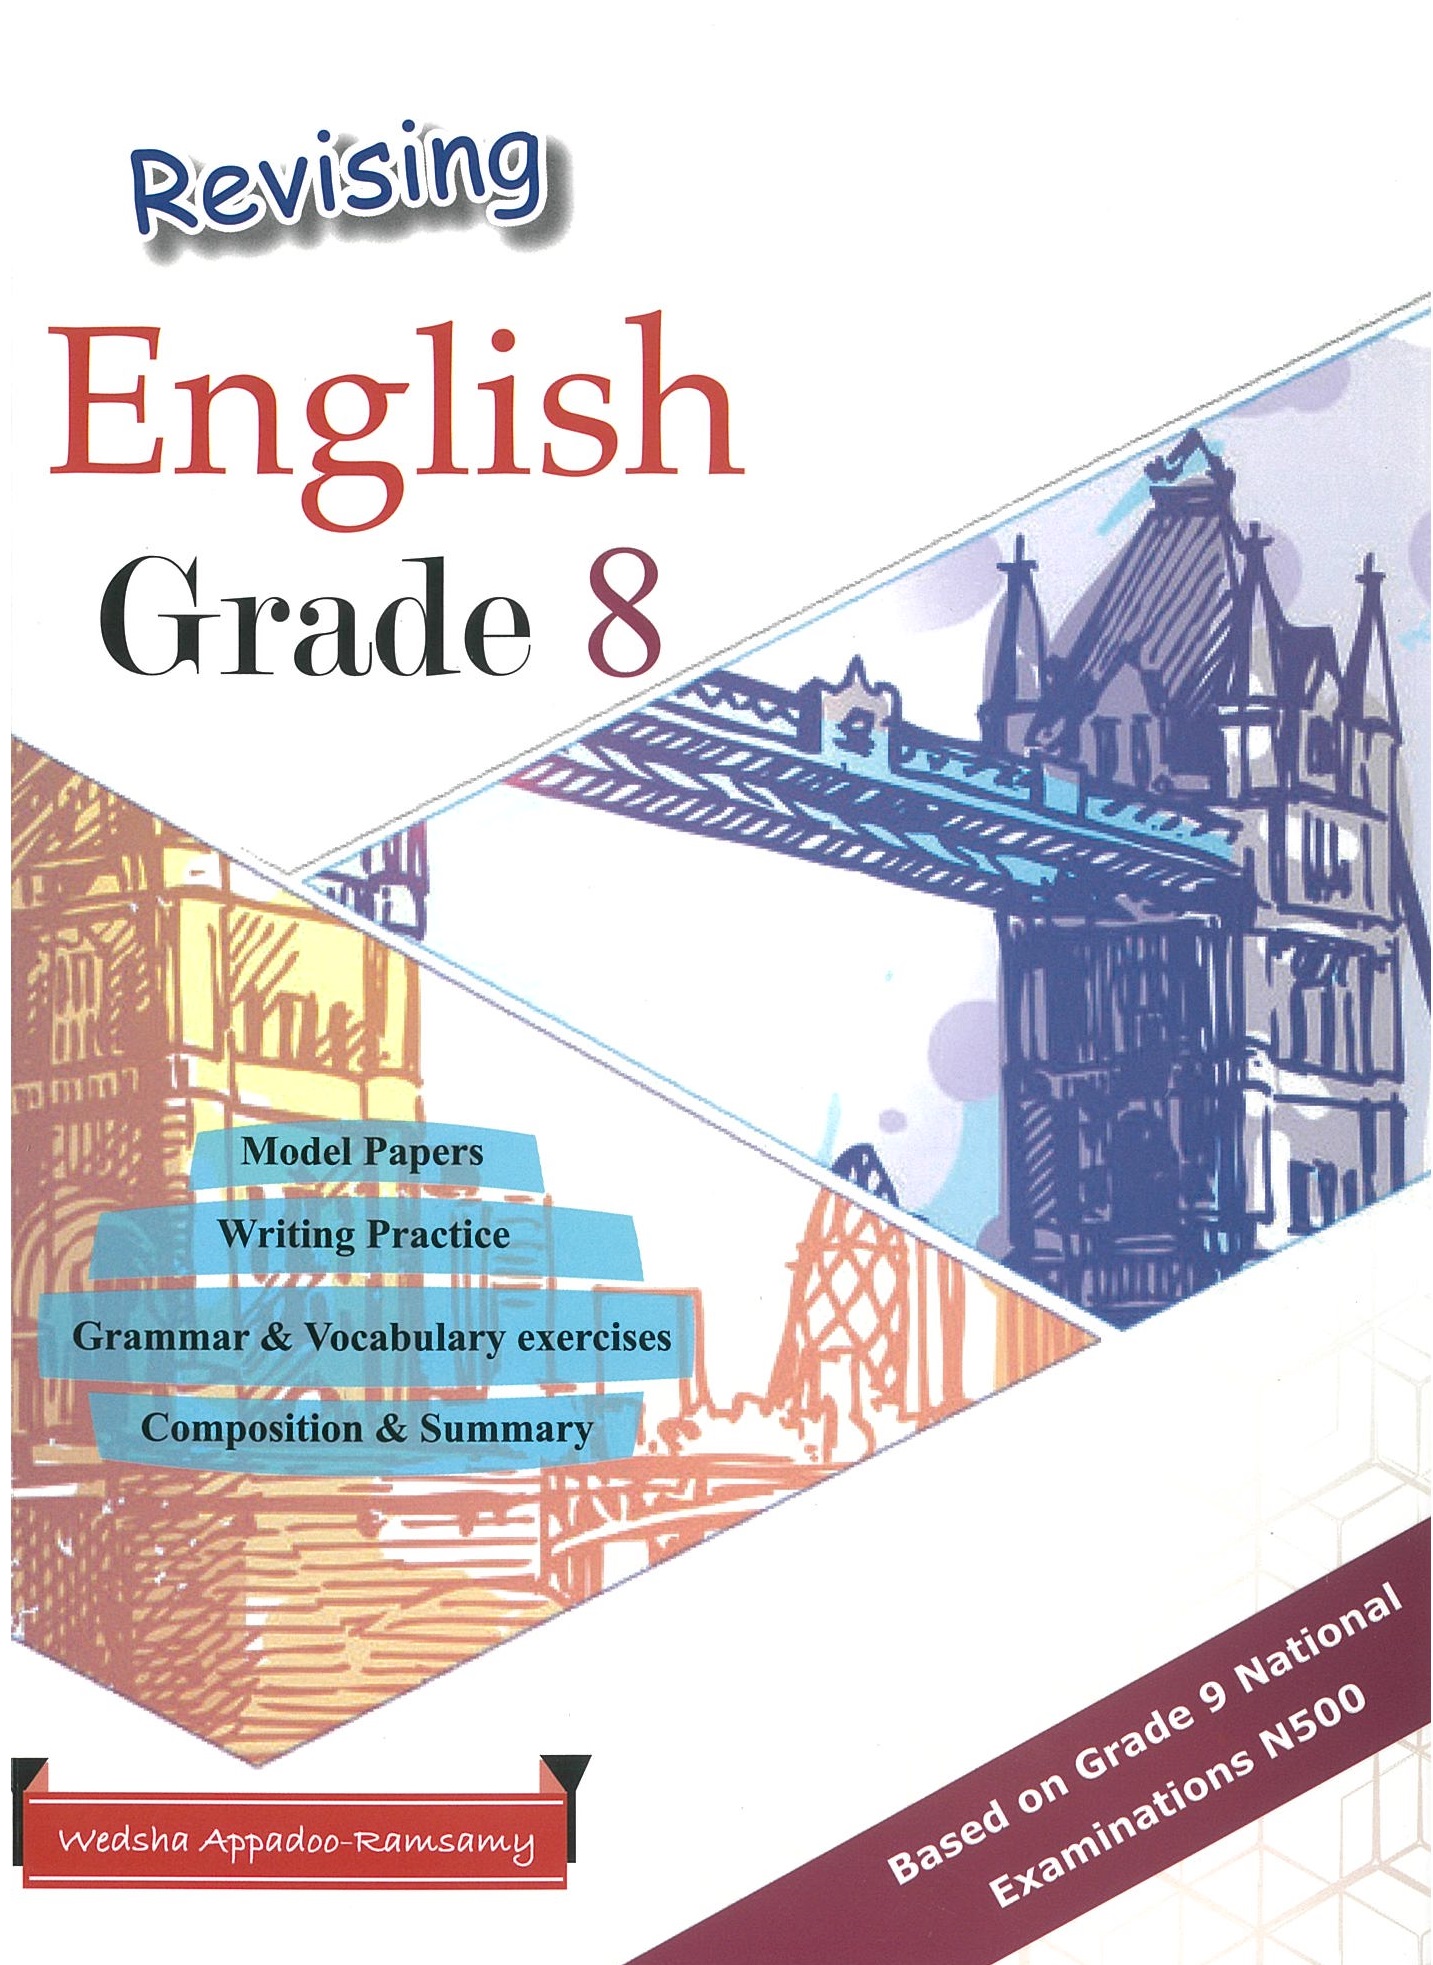 ELP - REVISING ENGLISH GRADE 8 - APPADOO